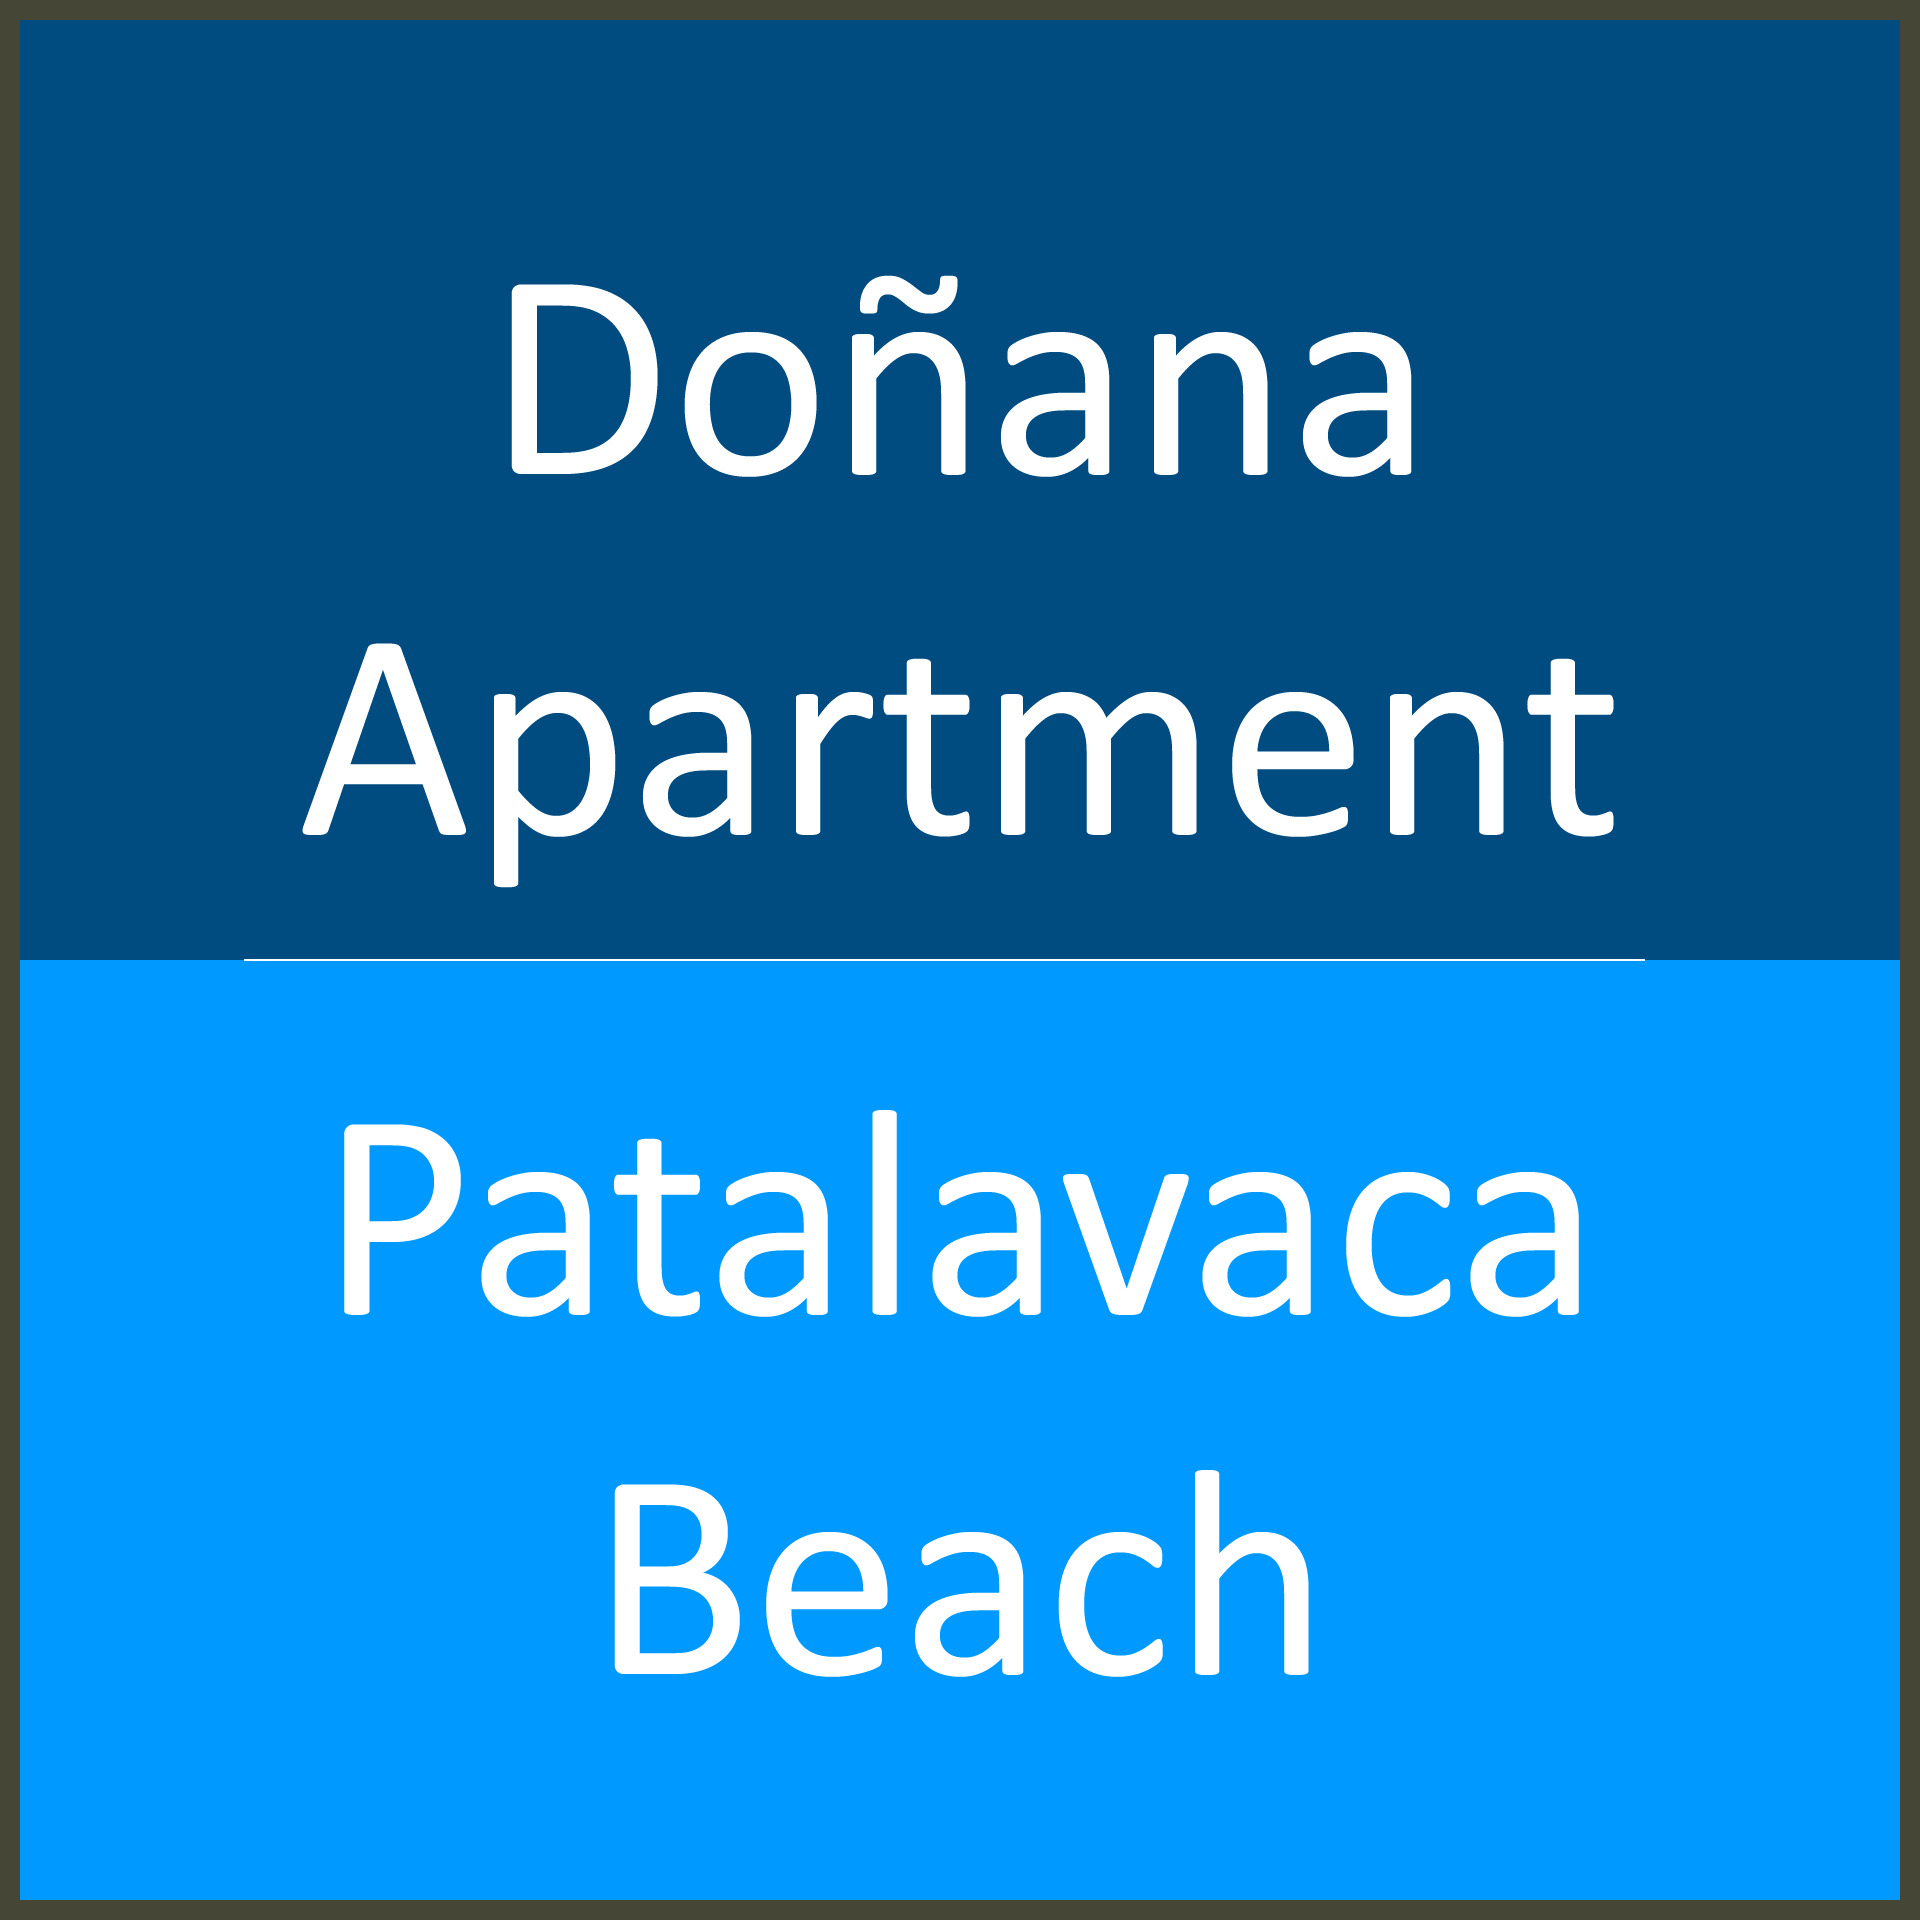 Doñana Apartment Patalavaca Beach - Logo